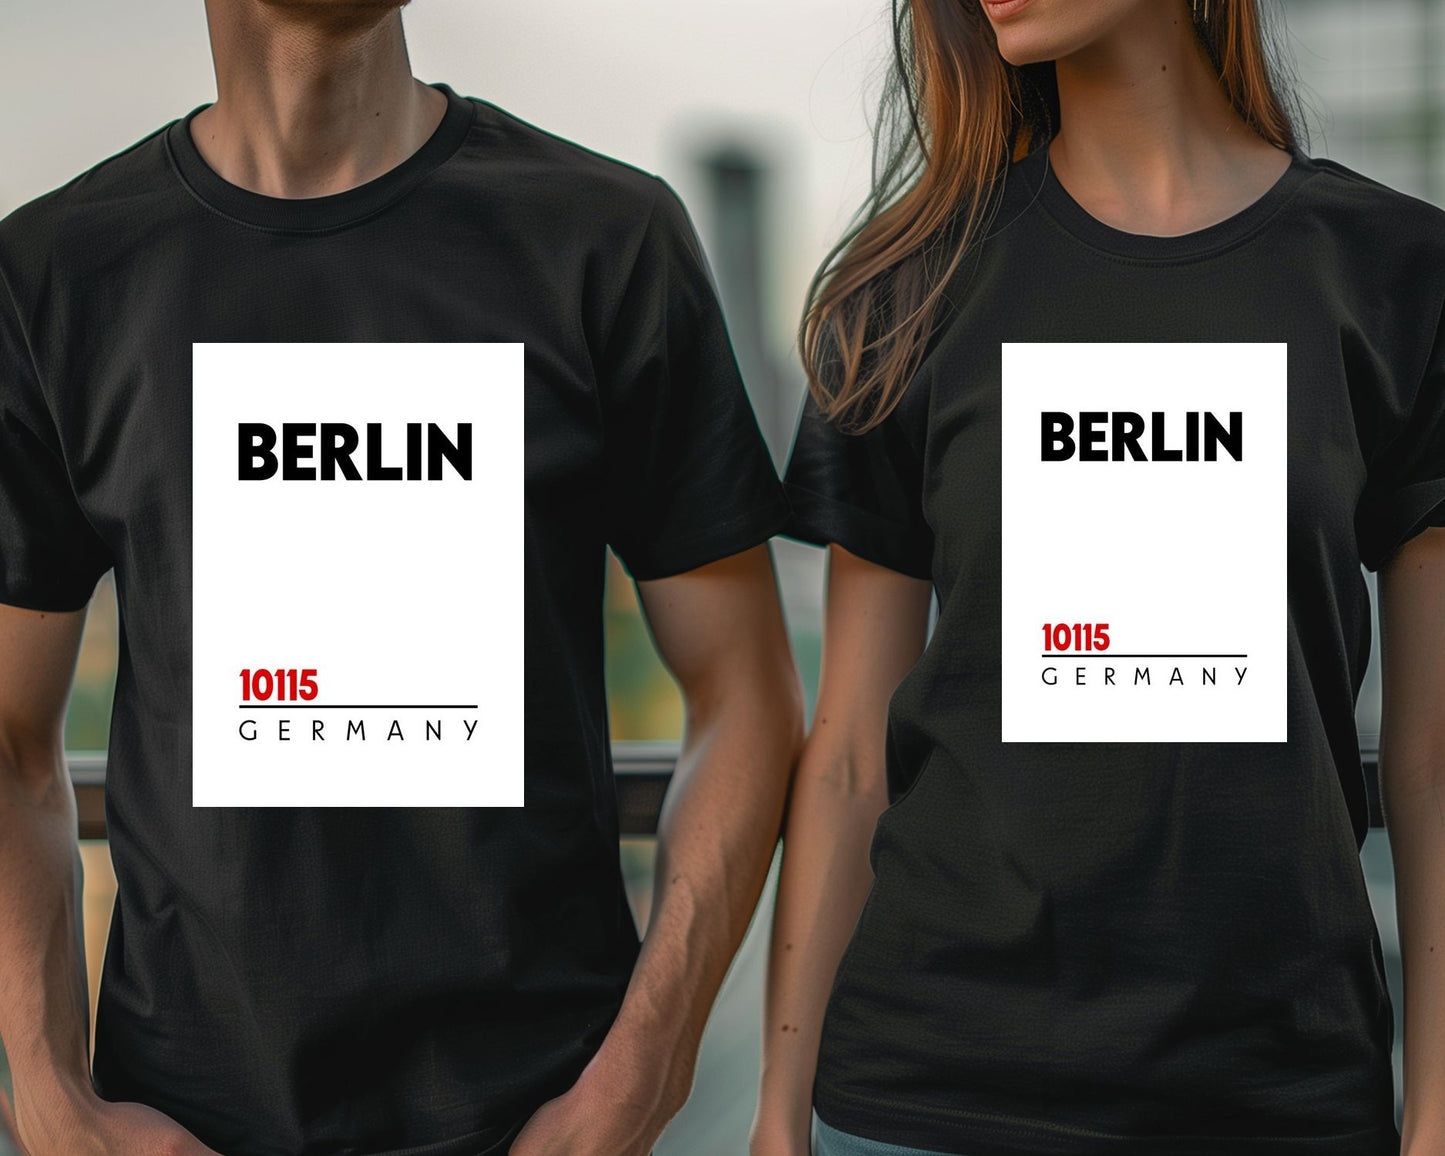 Berlin 10115 Postal Code - @VickyHanggara